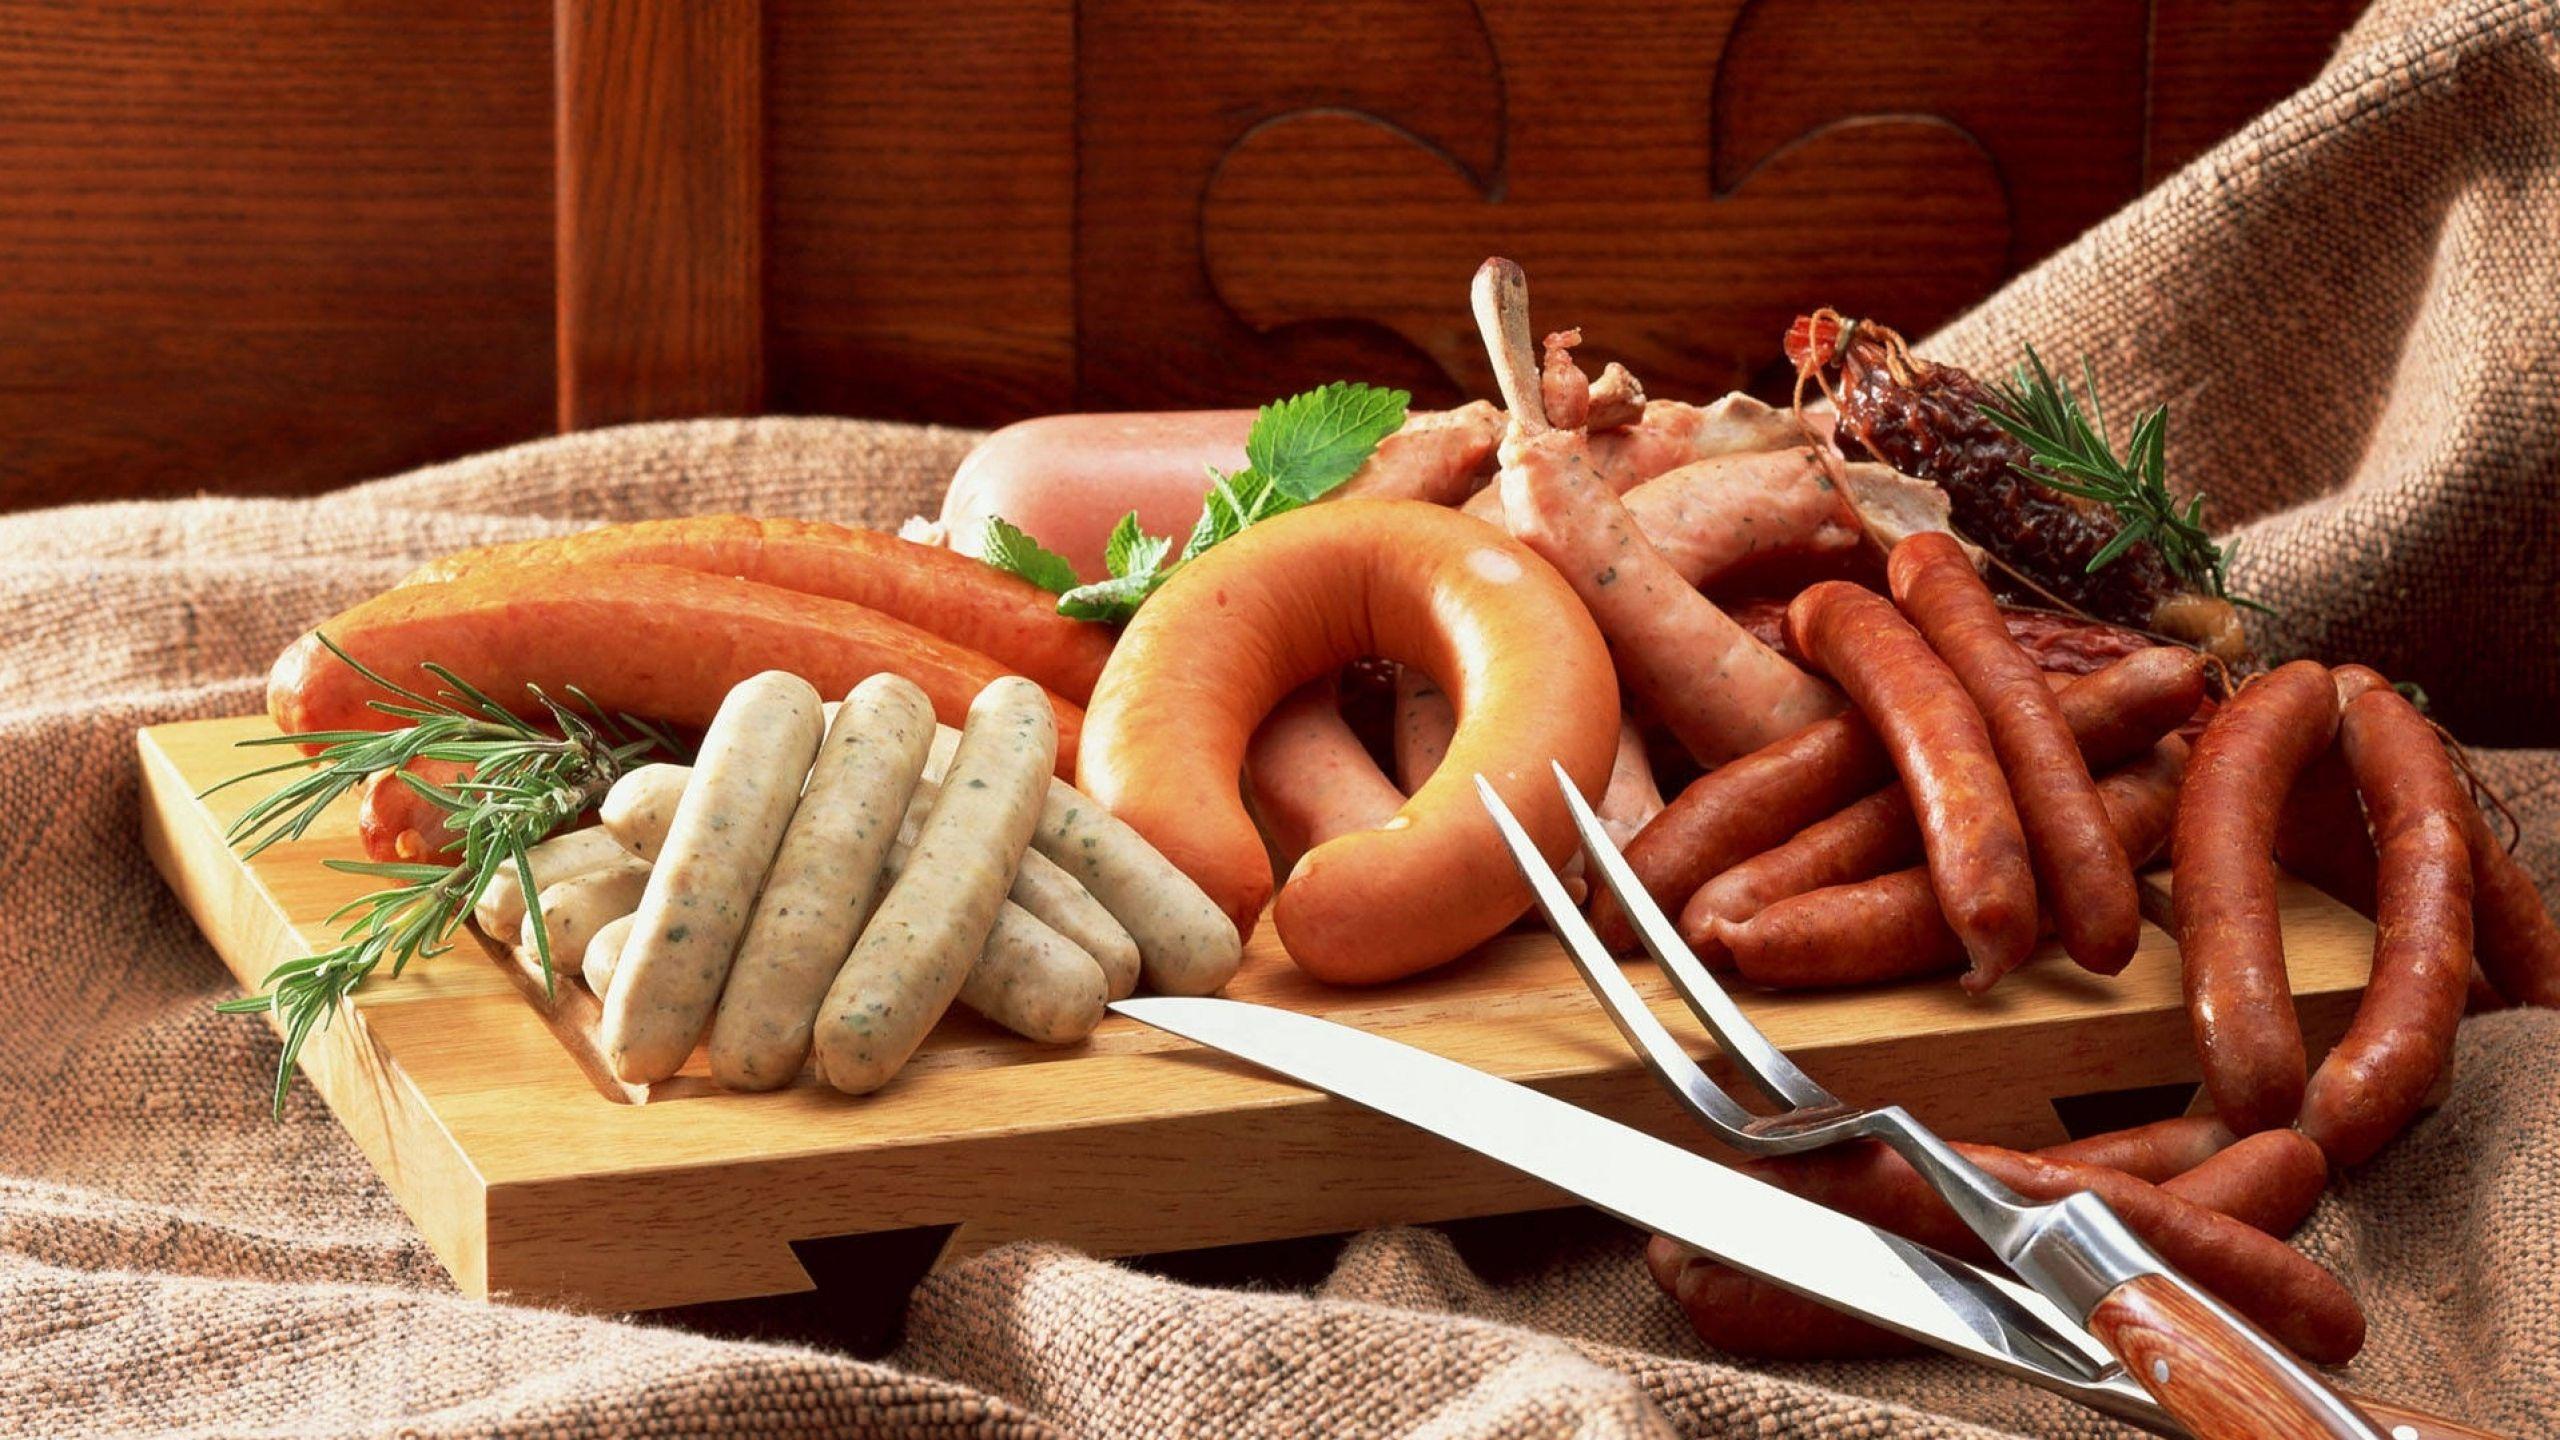 Download Wallpaper 2560x1440 Sausage, Variety, Meats Mac iMac 27